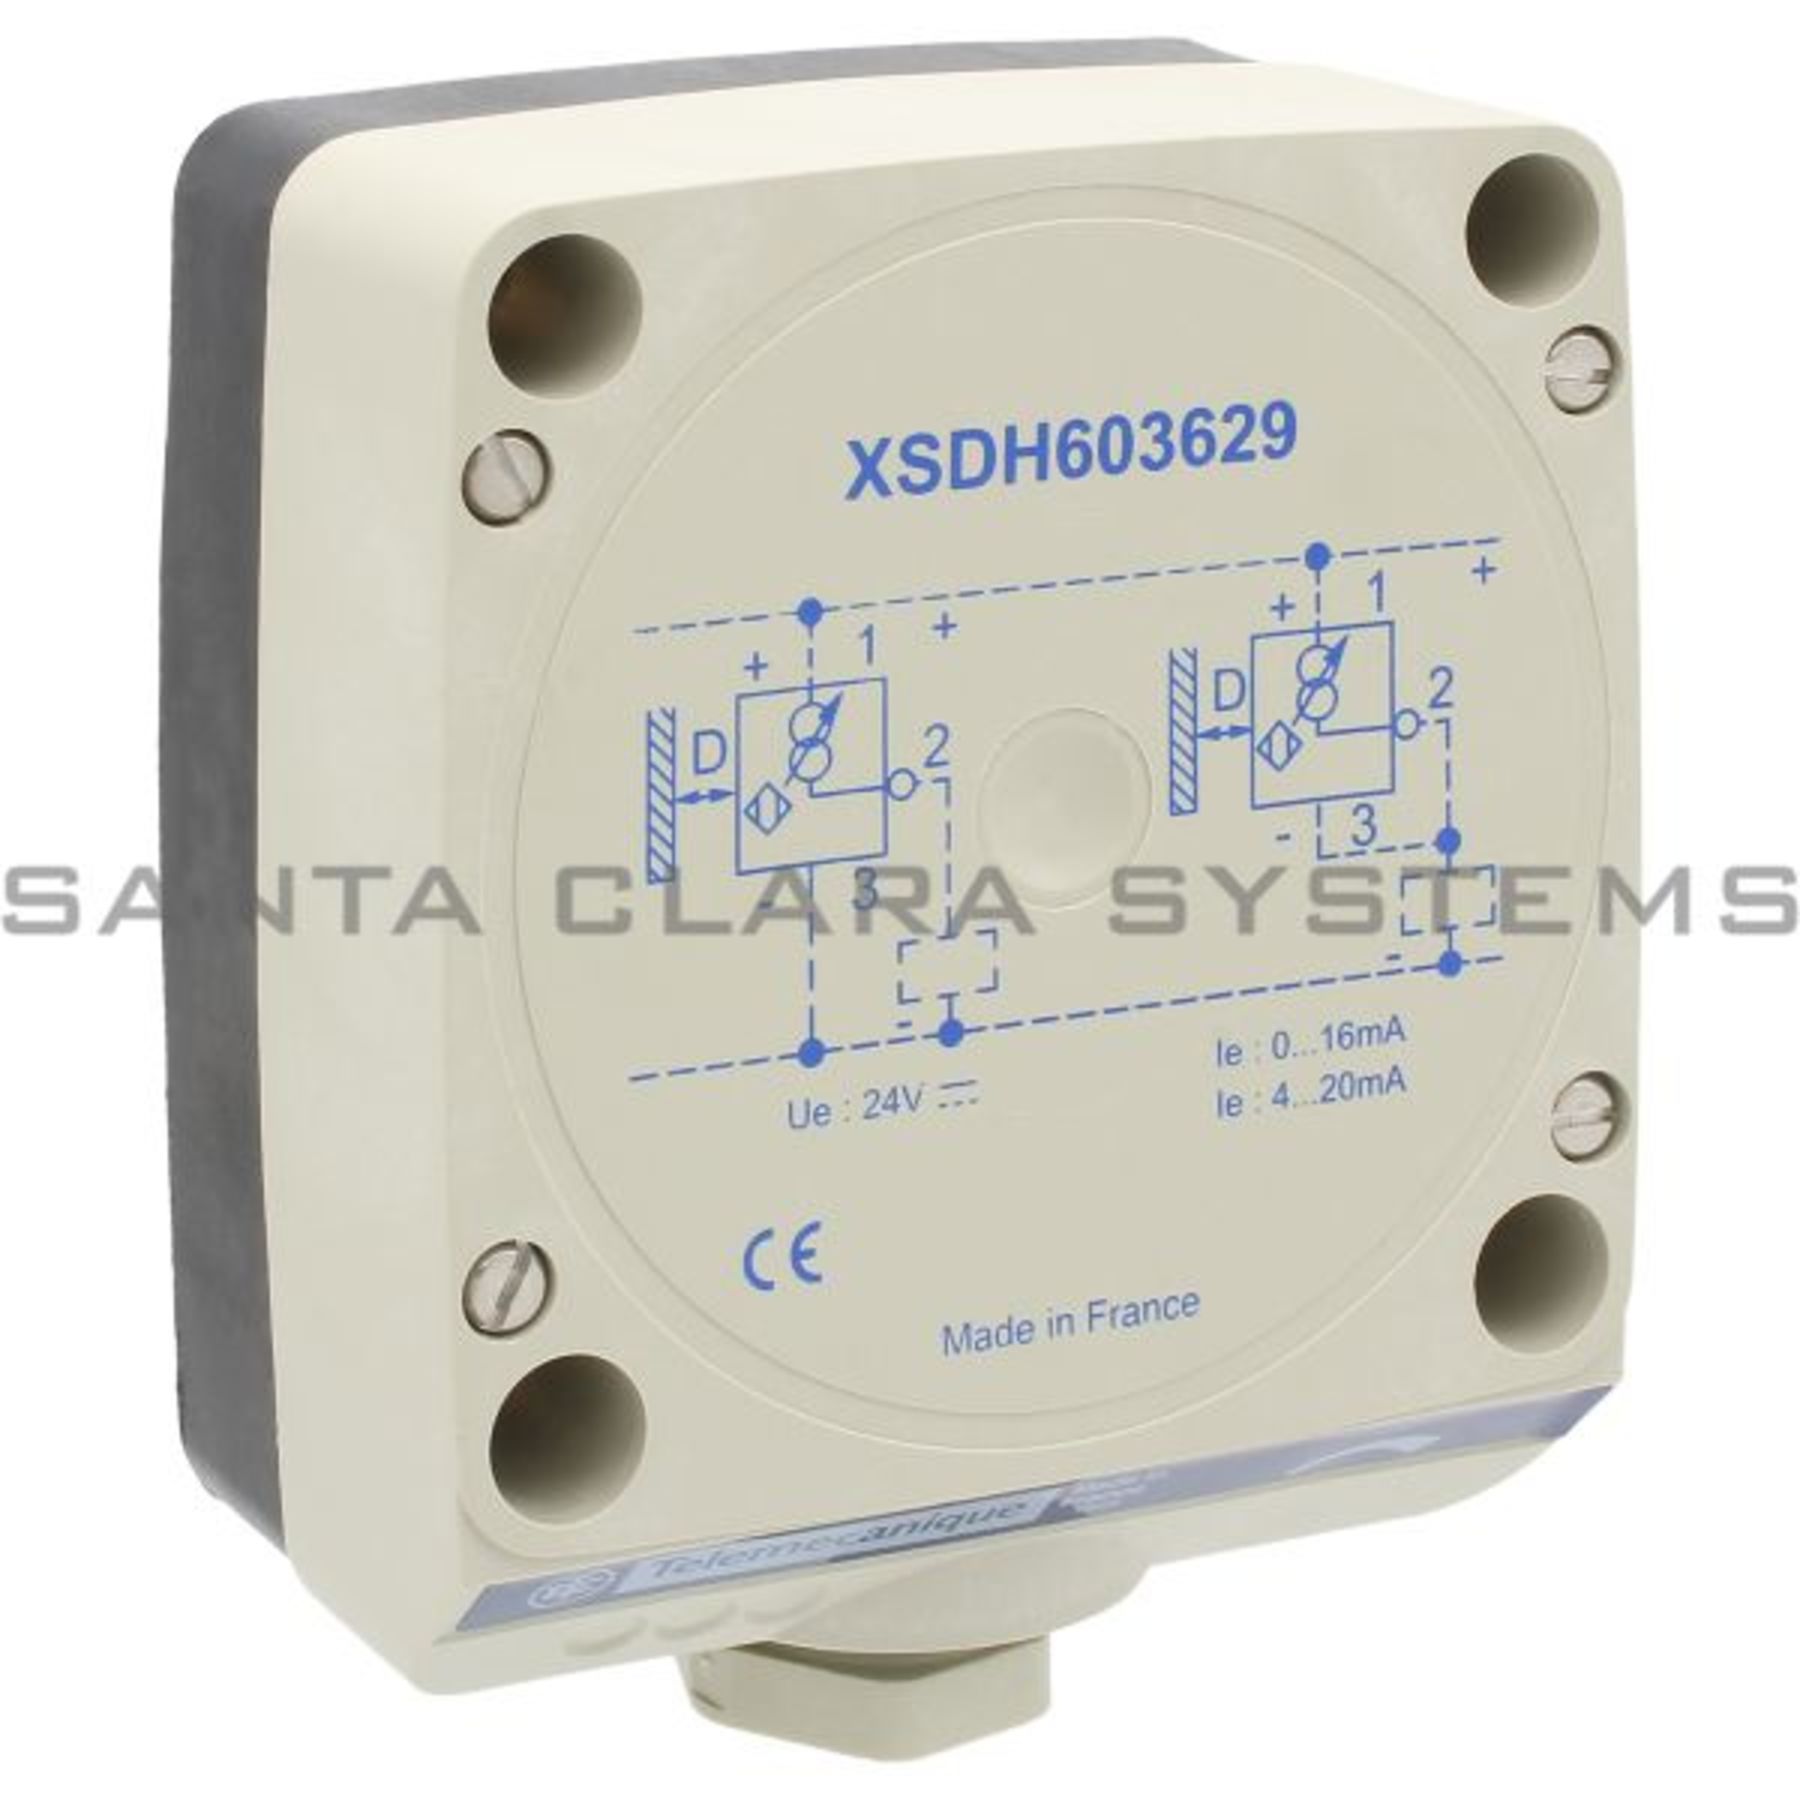 XSDH603629 Telemecanique Inductive Sensor - Santa Clara Systems